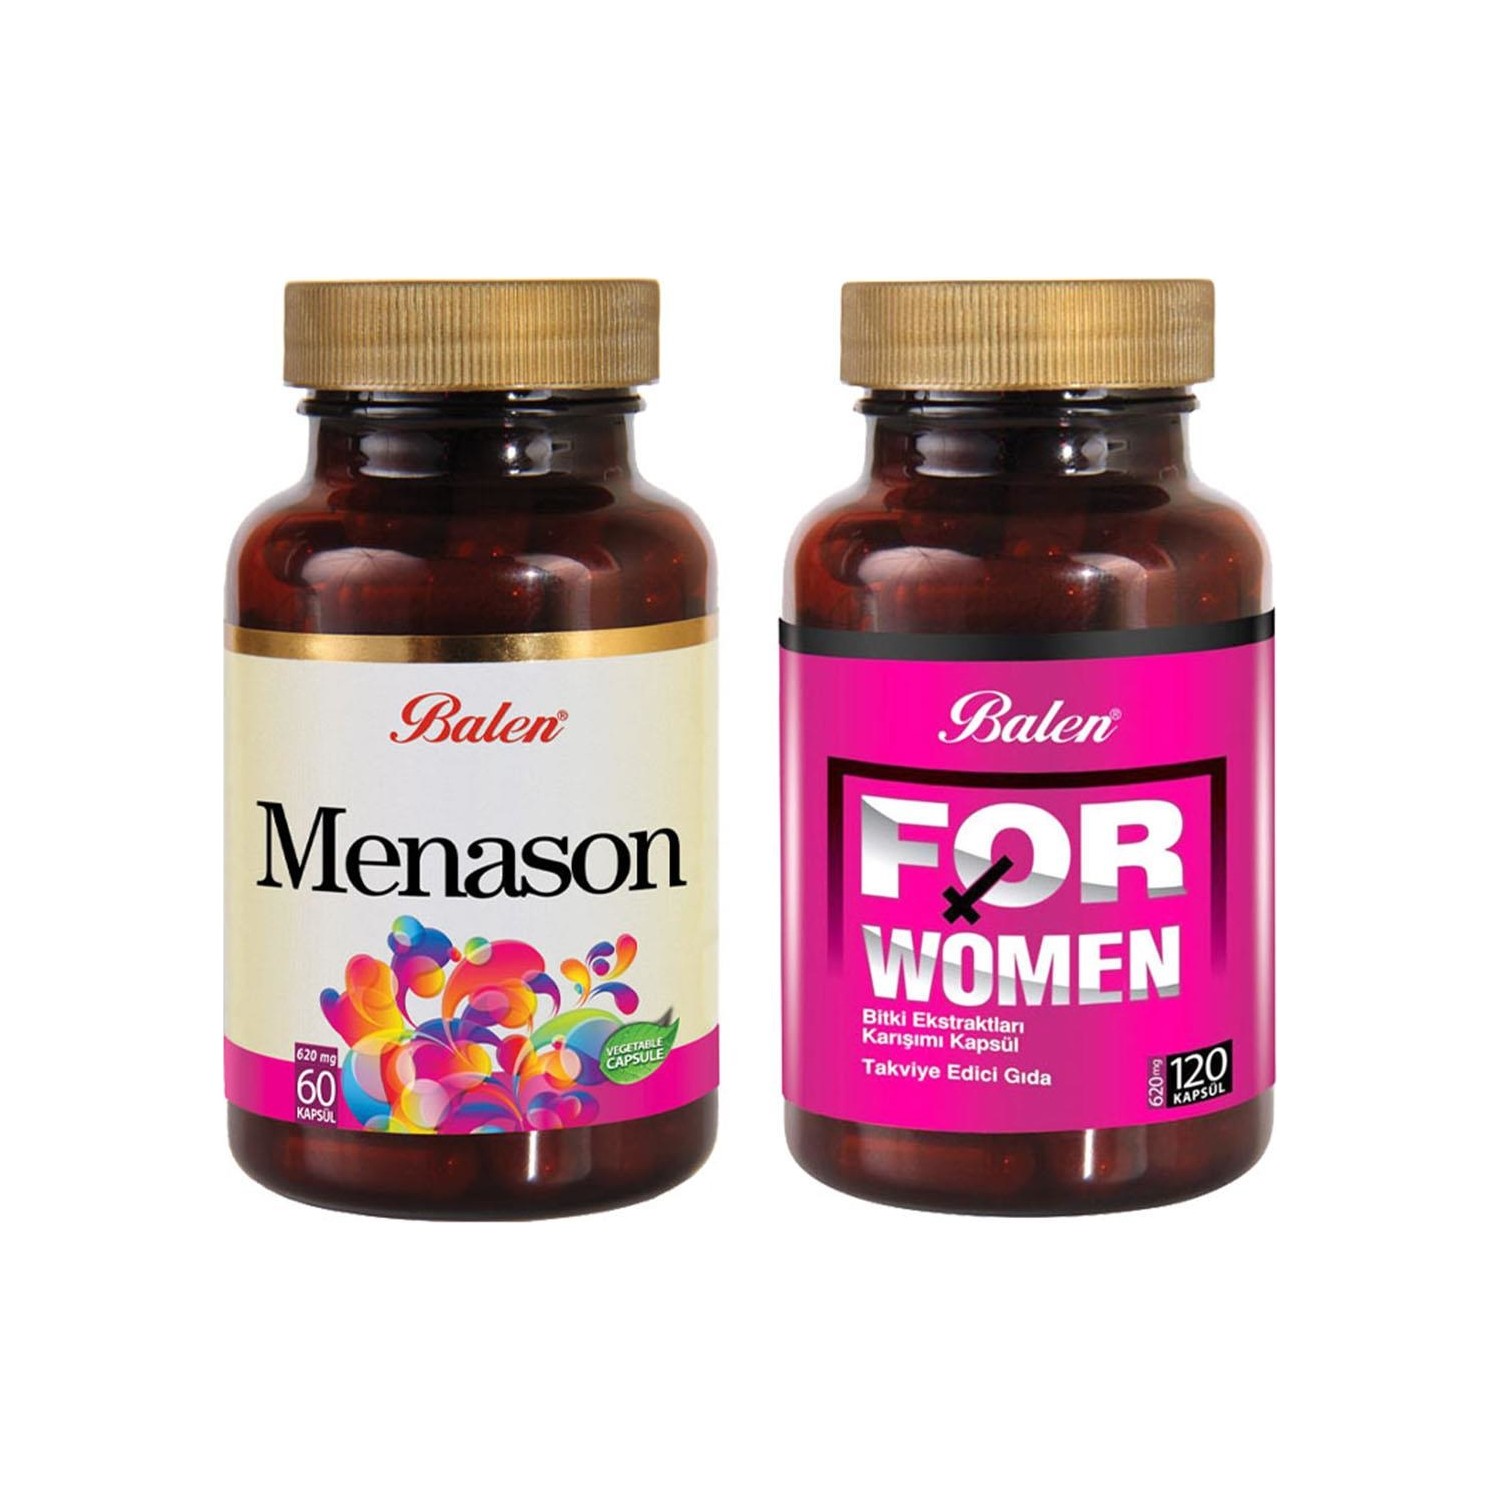 цена Активная добавка For Woman, 120 капсул, 620 мг + Менасон Balen, 60 капсул, 620 мг